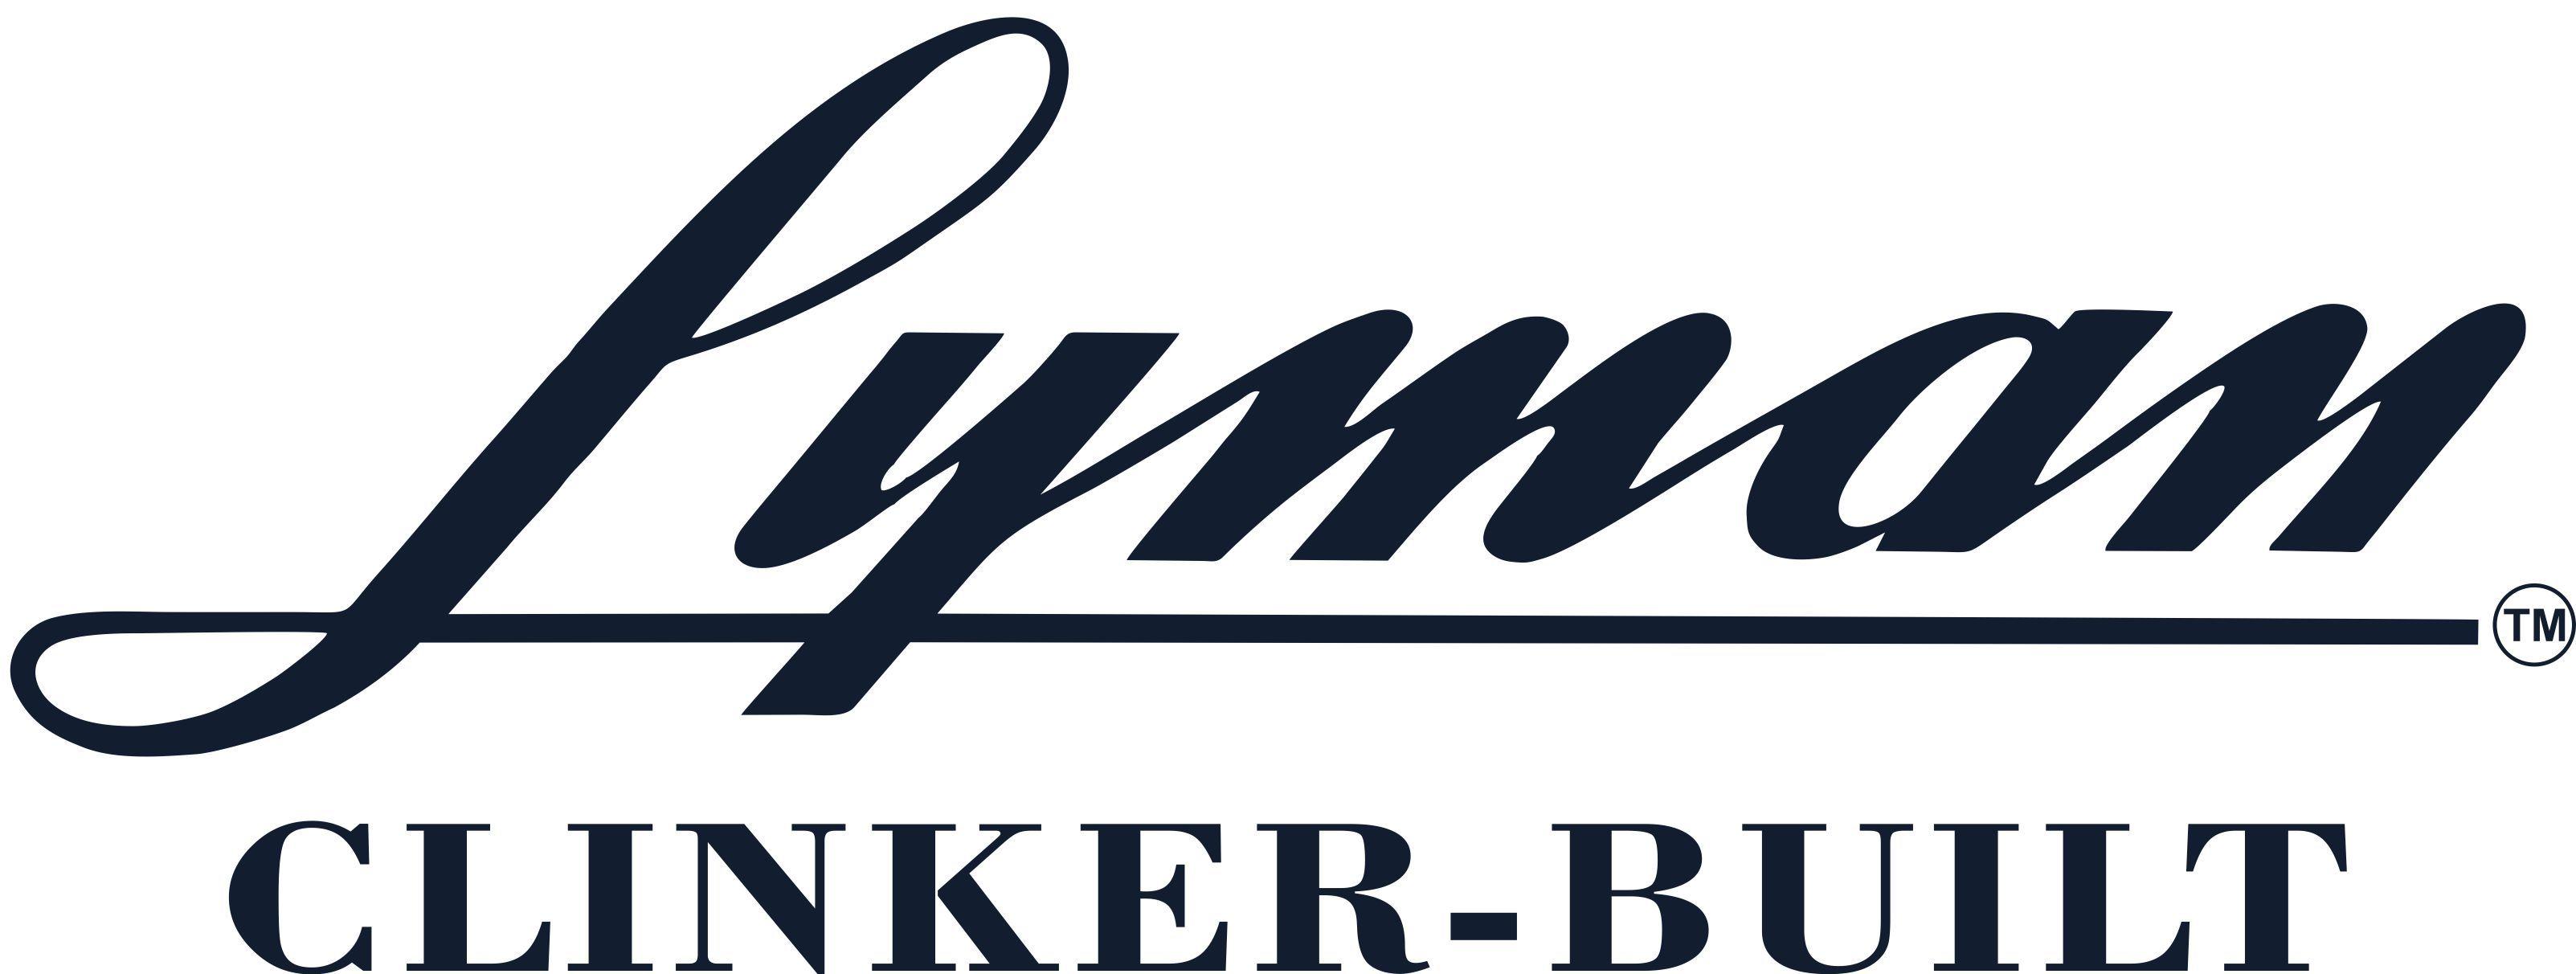 Lyman Logo - Lyman Kids' Tee (Navy, Light Blue, and White)